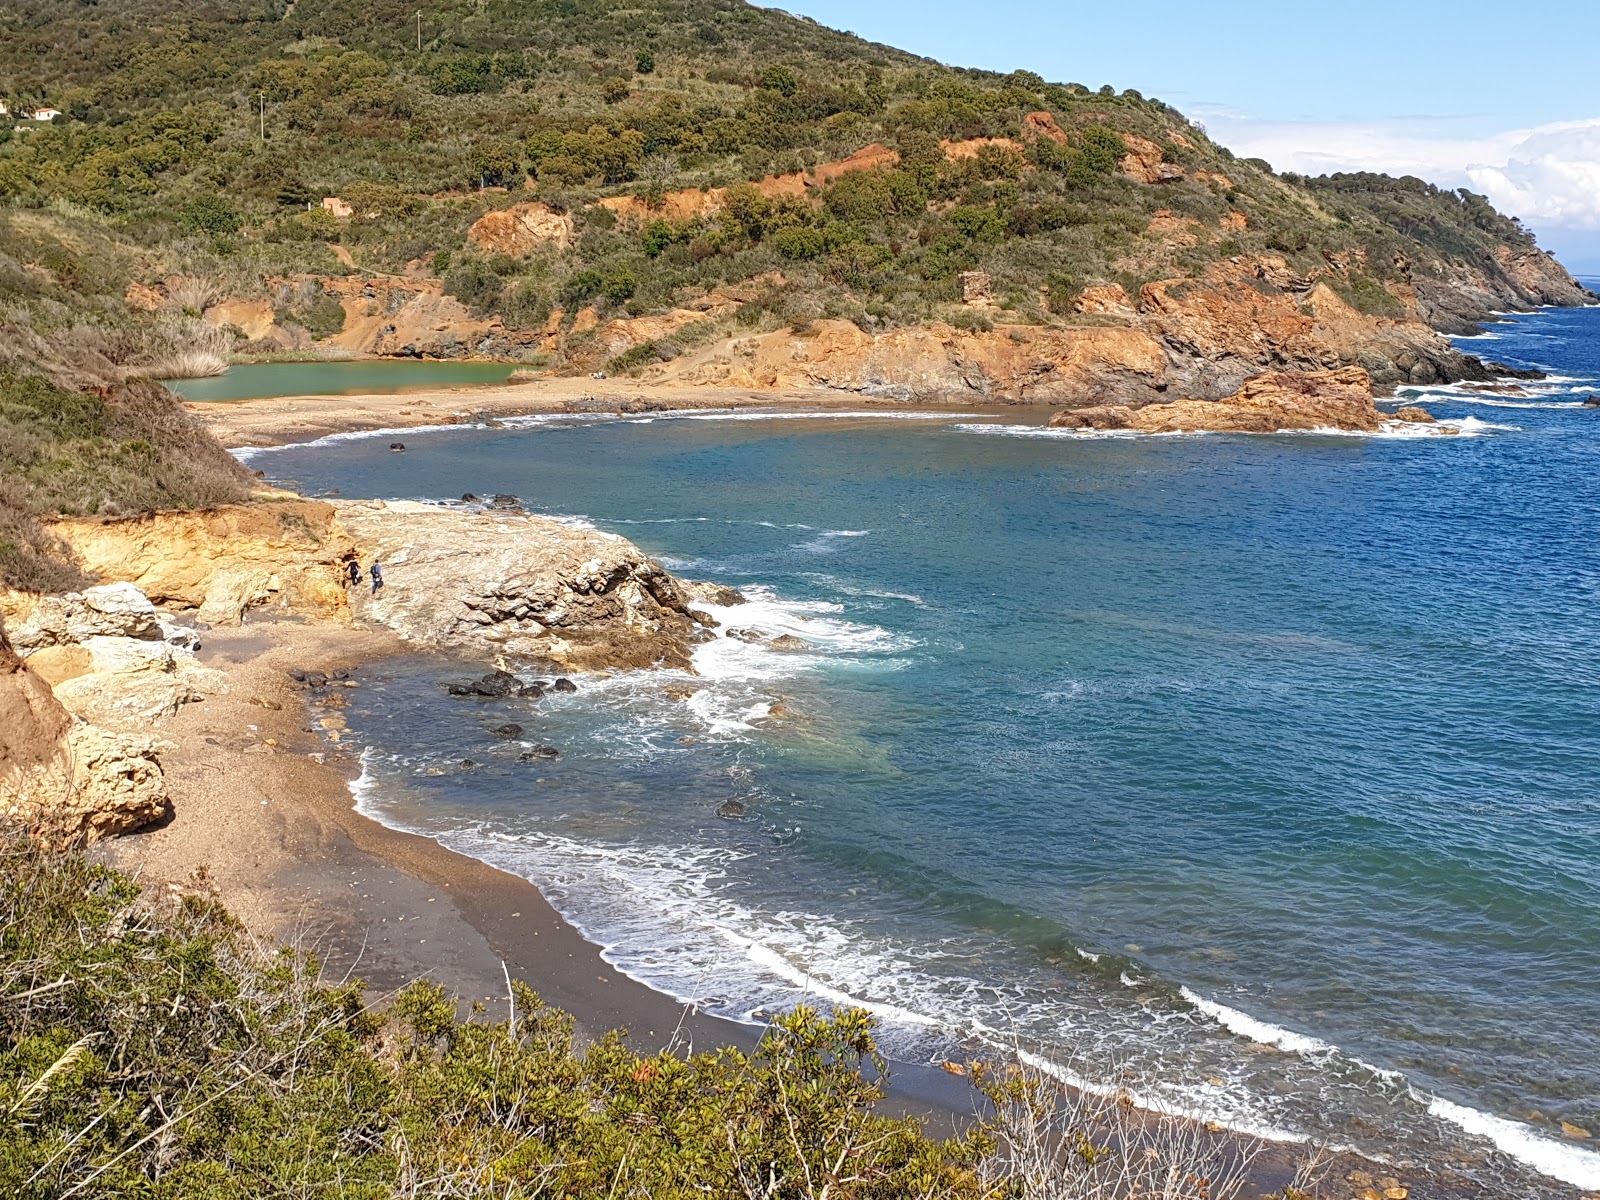 Photo de Spiaggia Di Terranera situé dans une zone naturelle